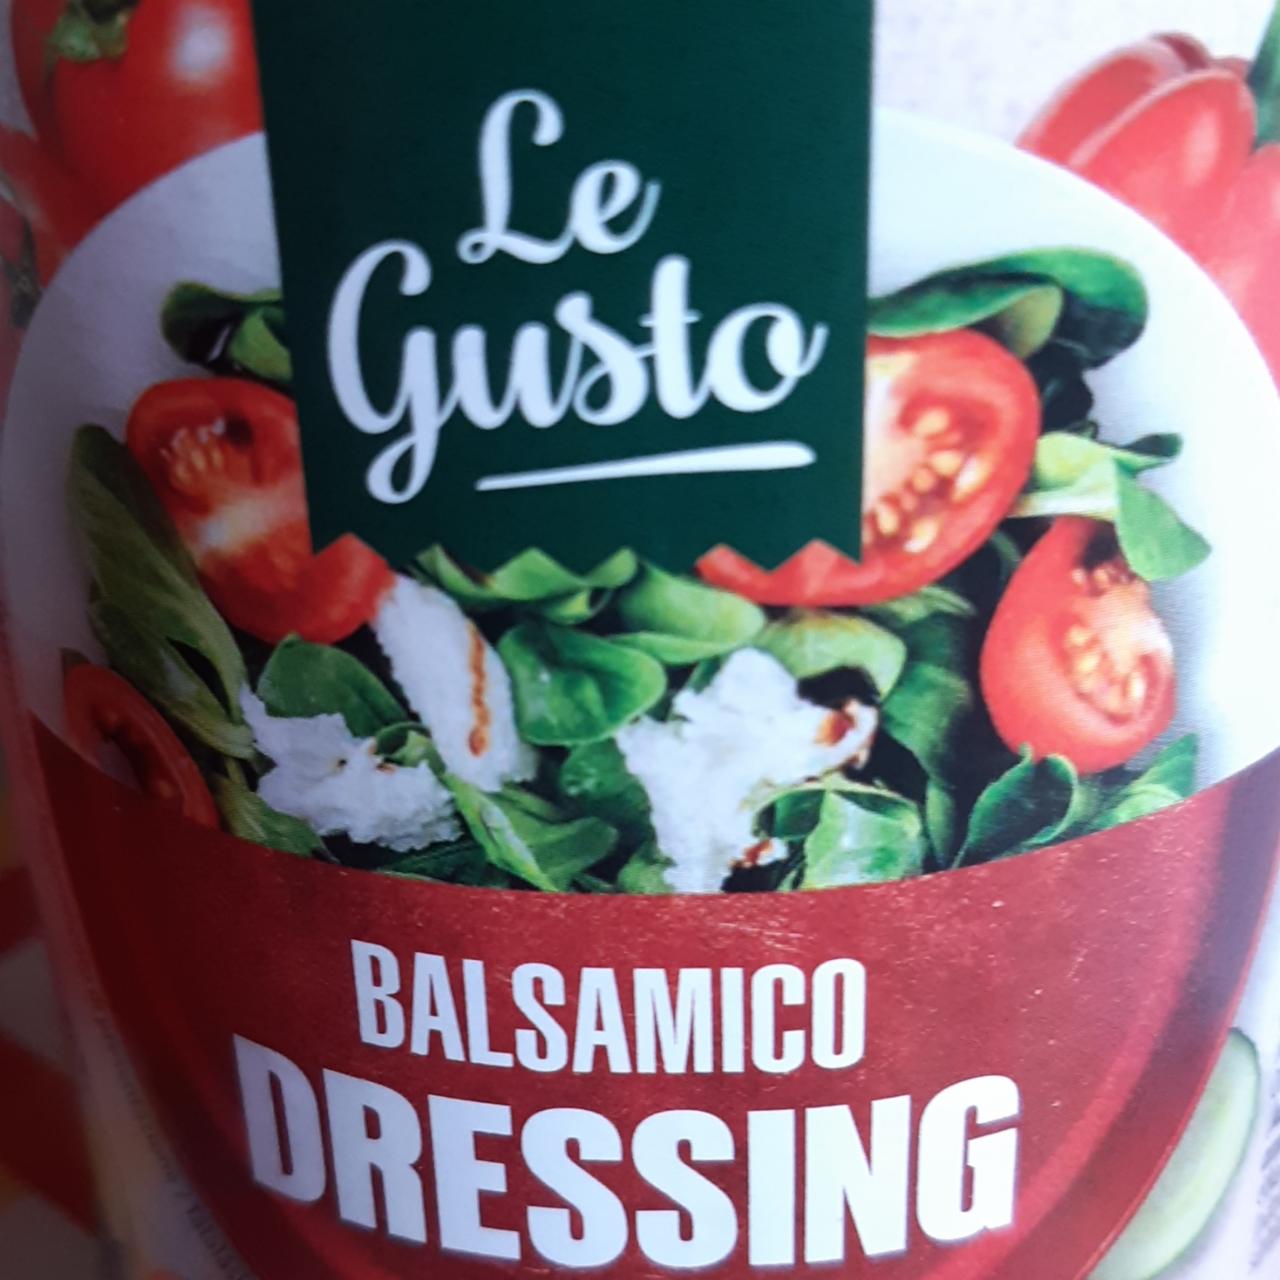 Képek - Balsamico dressing Le Gusto